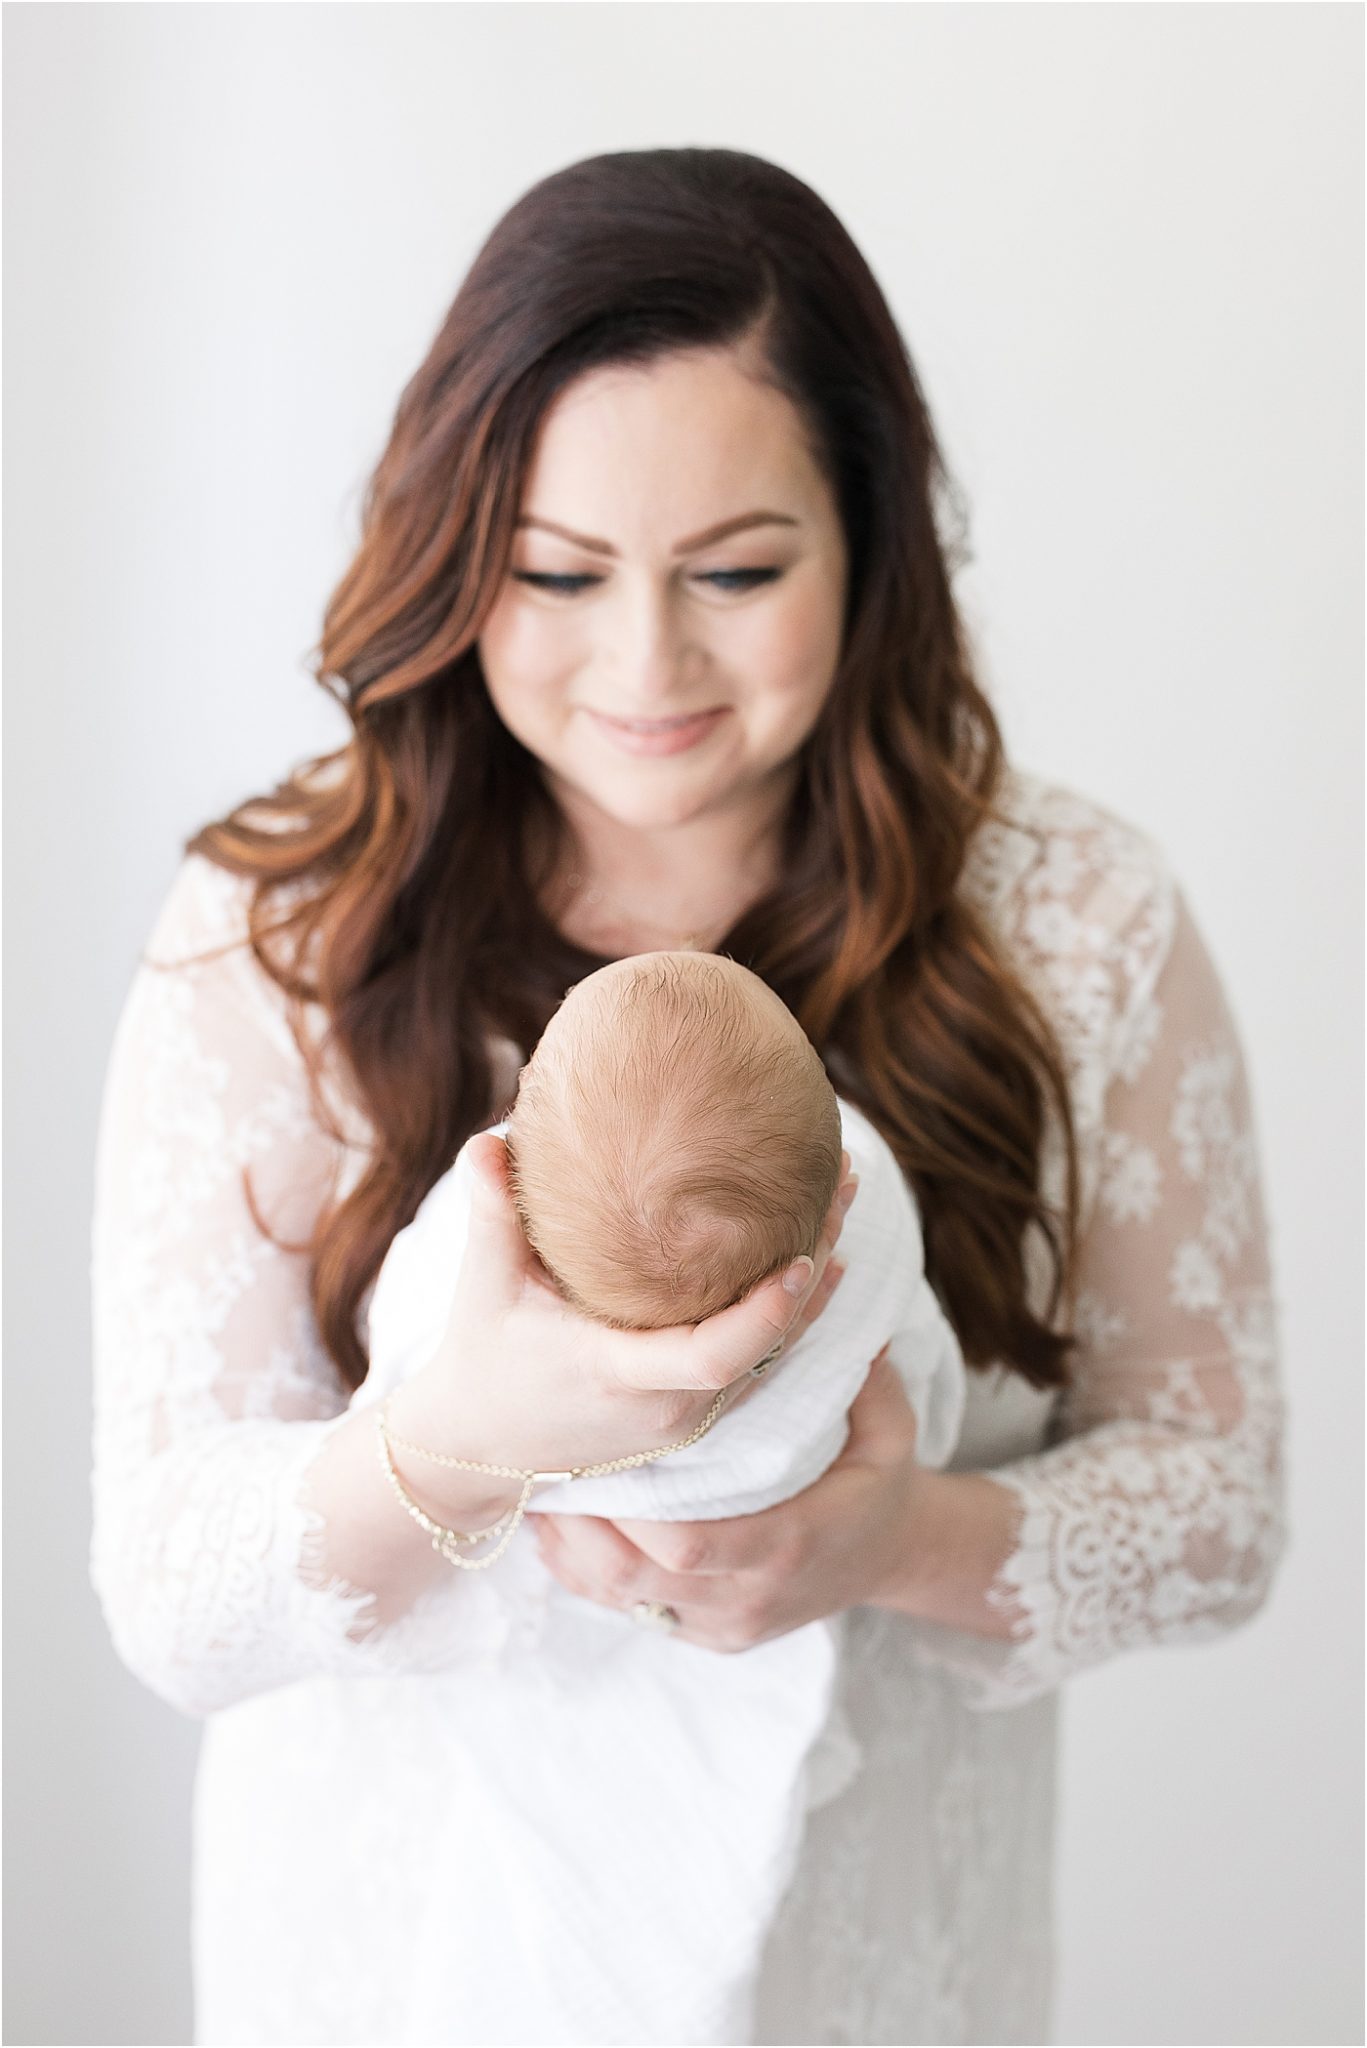 Newborn session for premie baby boy. Photo by Lindsay Konopa Photography.